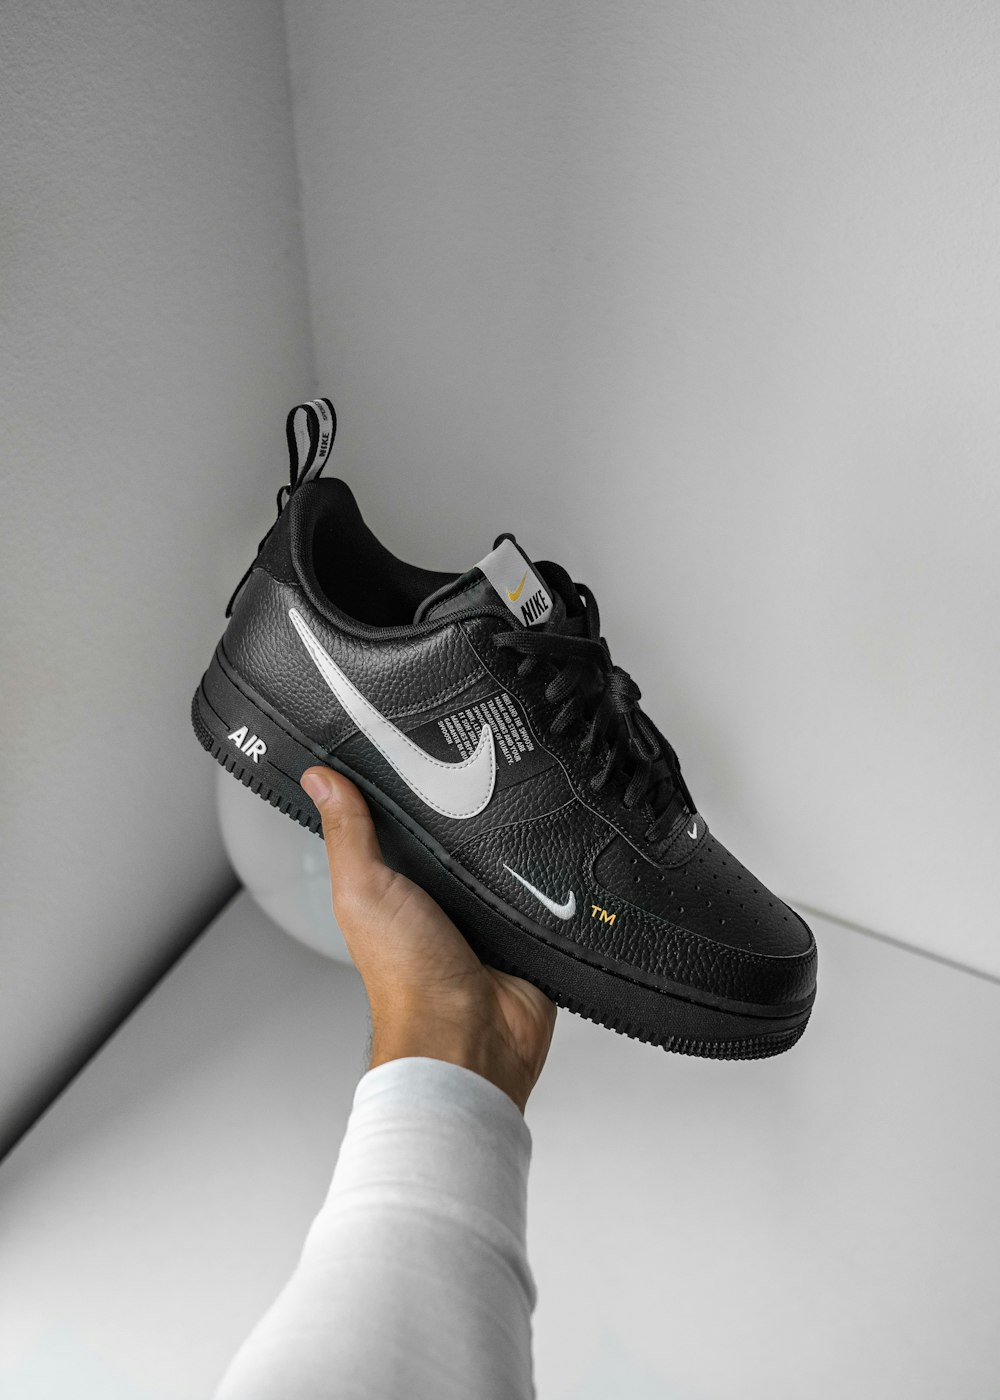 tênis Nike Air Force 1 preto e branco